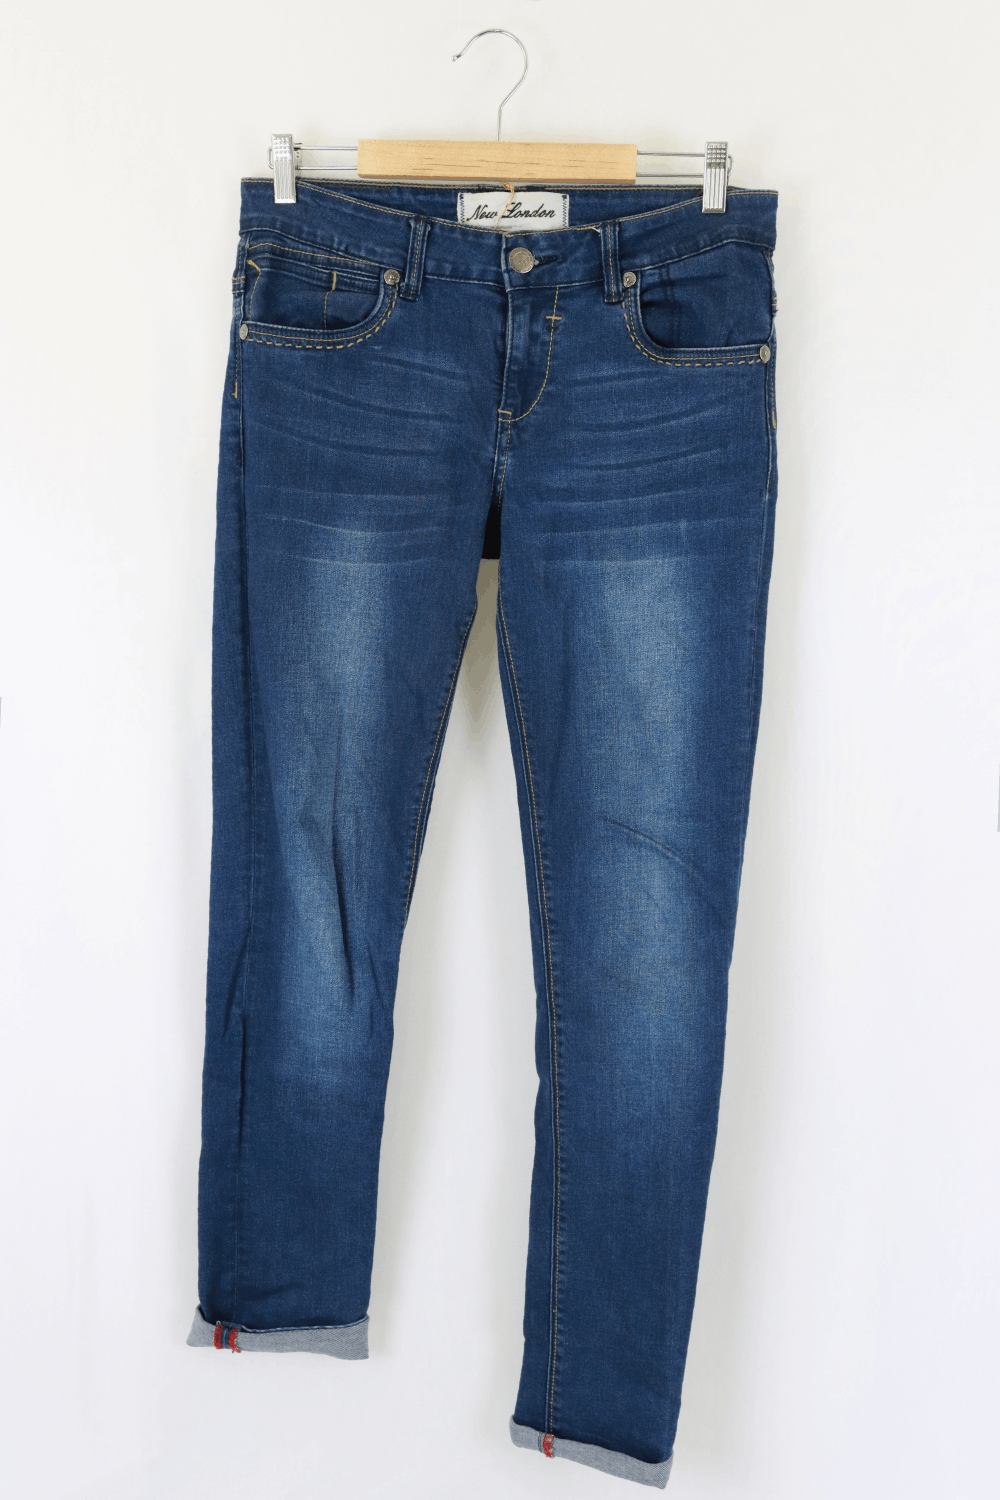 New London Blue Denim Jeans 8